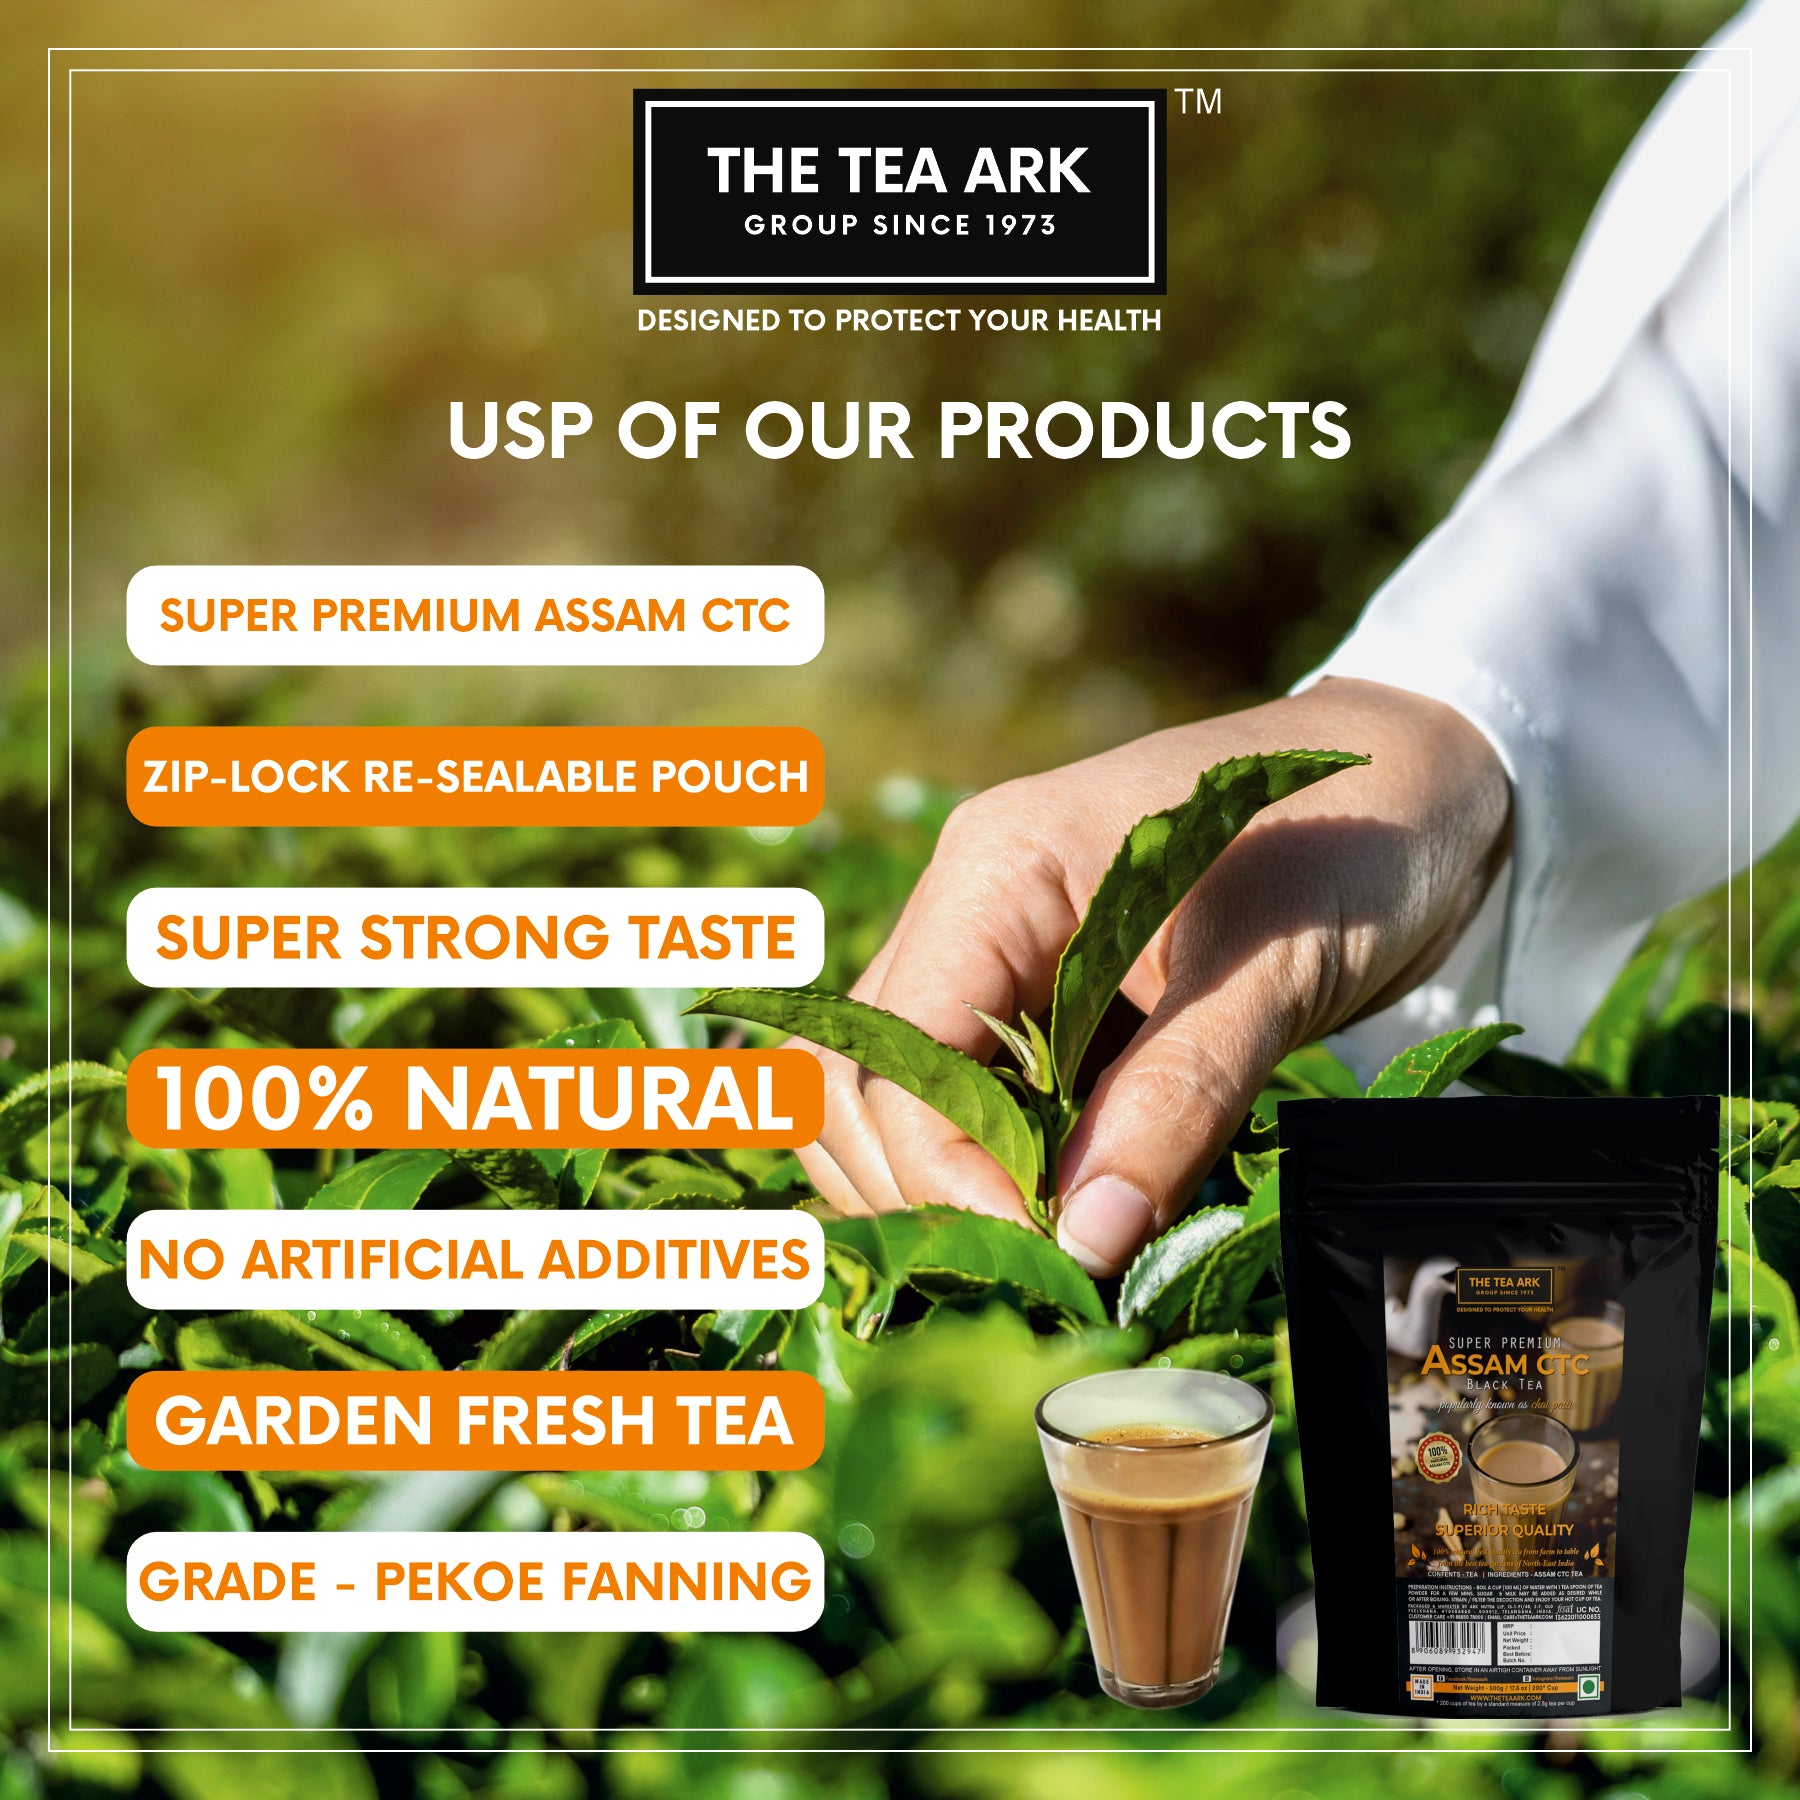 The Tea Ark Assam CTC Premium Black Tea Powder Chai Patti